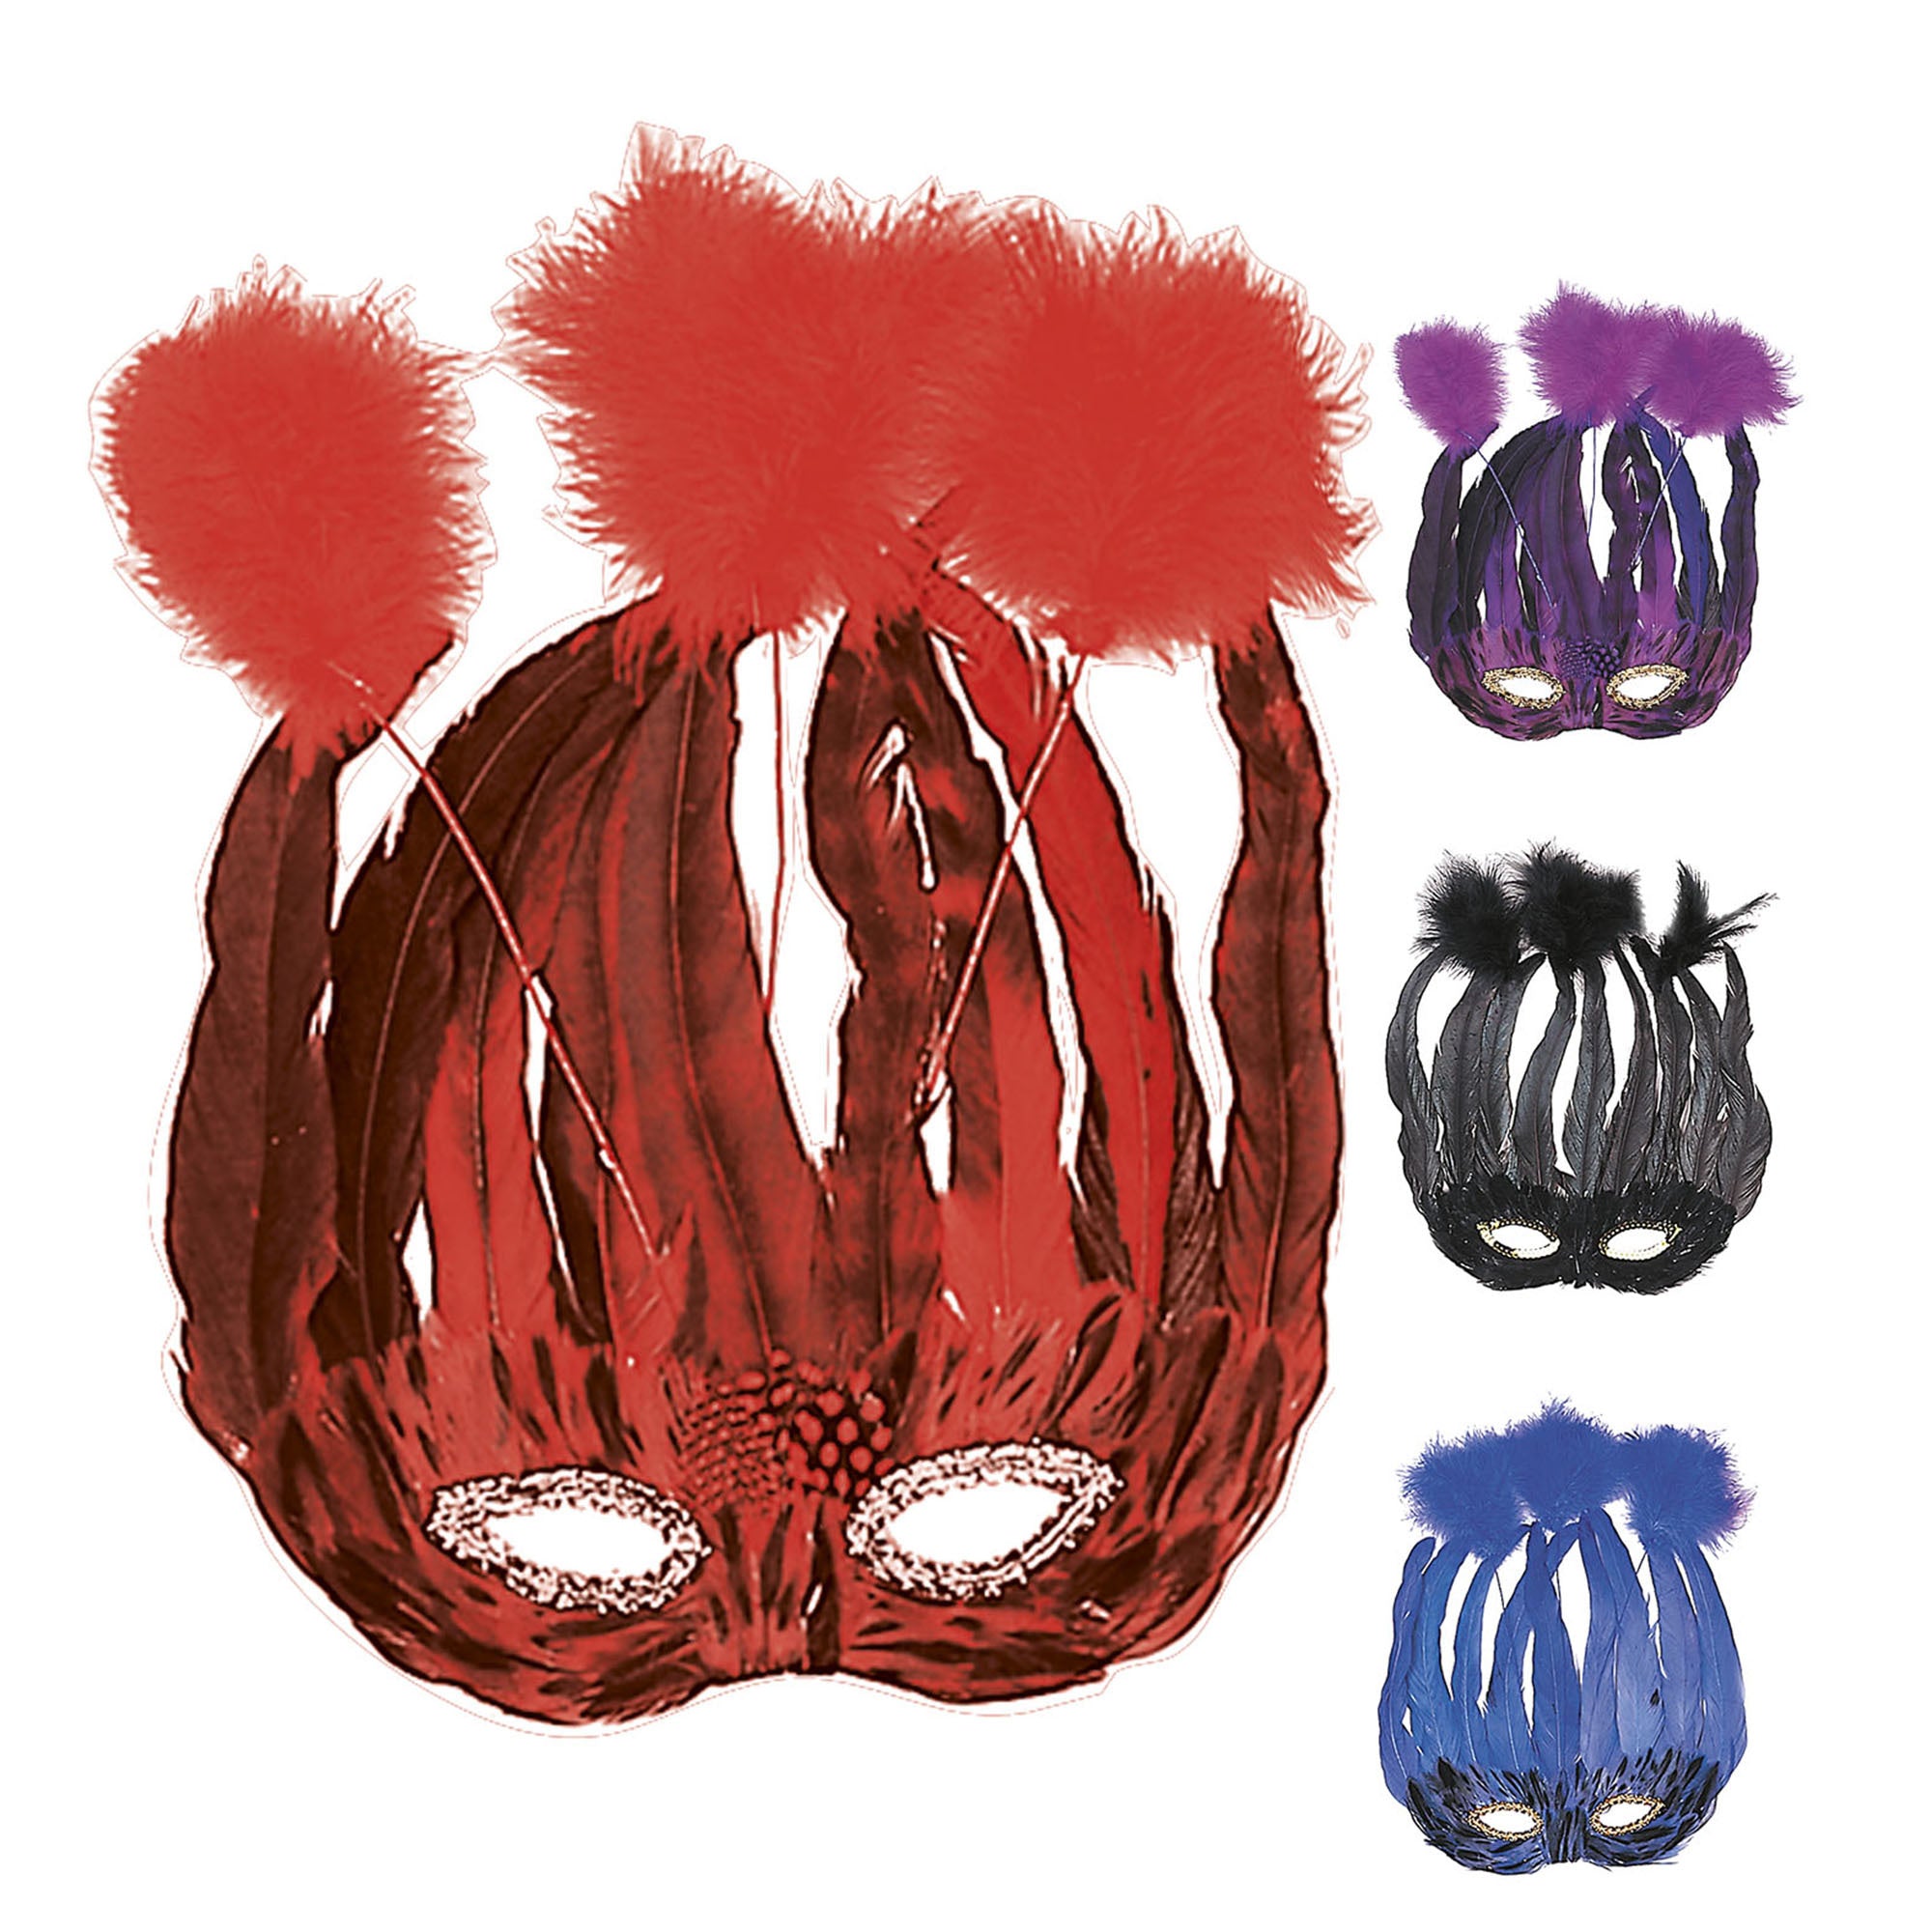 Carnavals-accessoires: Lido veren masker, in diverse kleuren